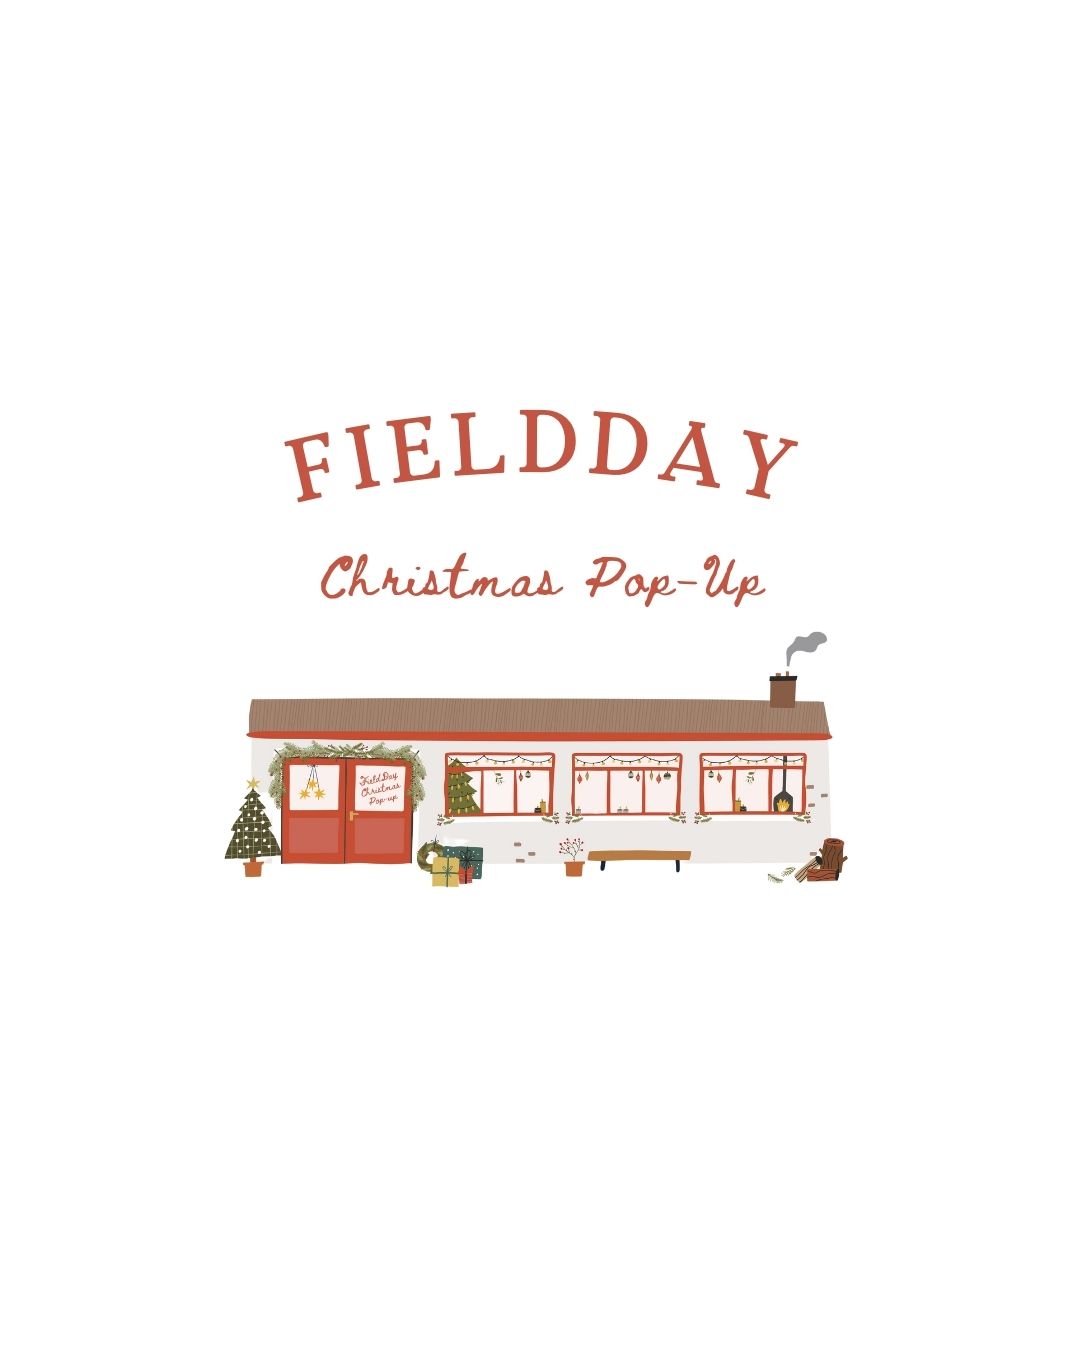 FieldDay Christmas Pop-Up